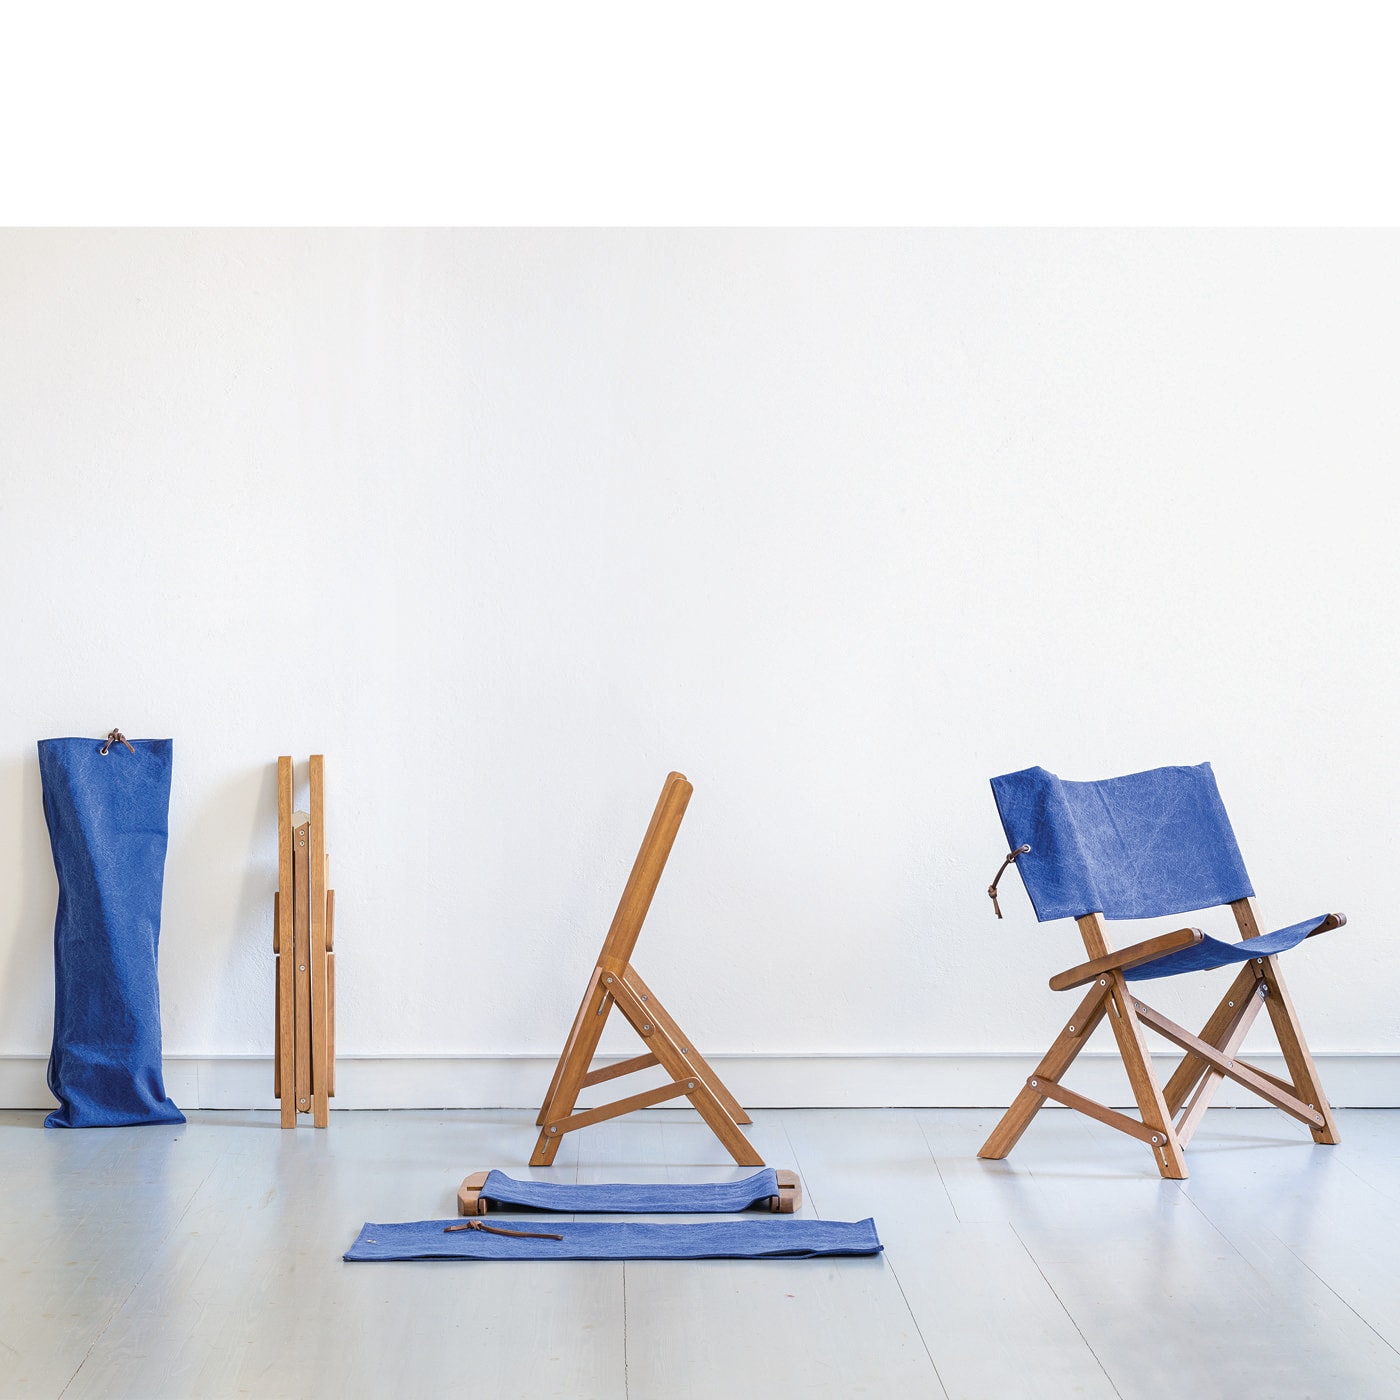 Dino Folding Chair by Tonuccidesign - Manifestodesign